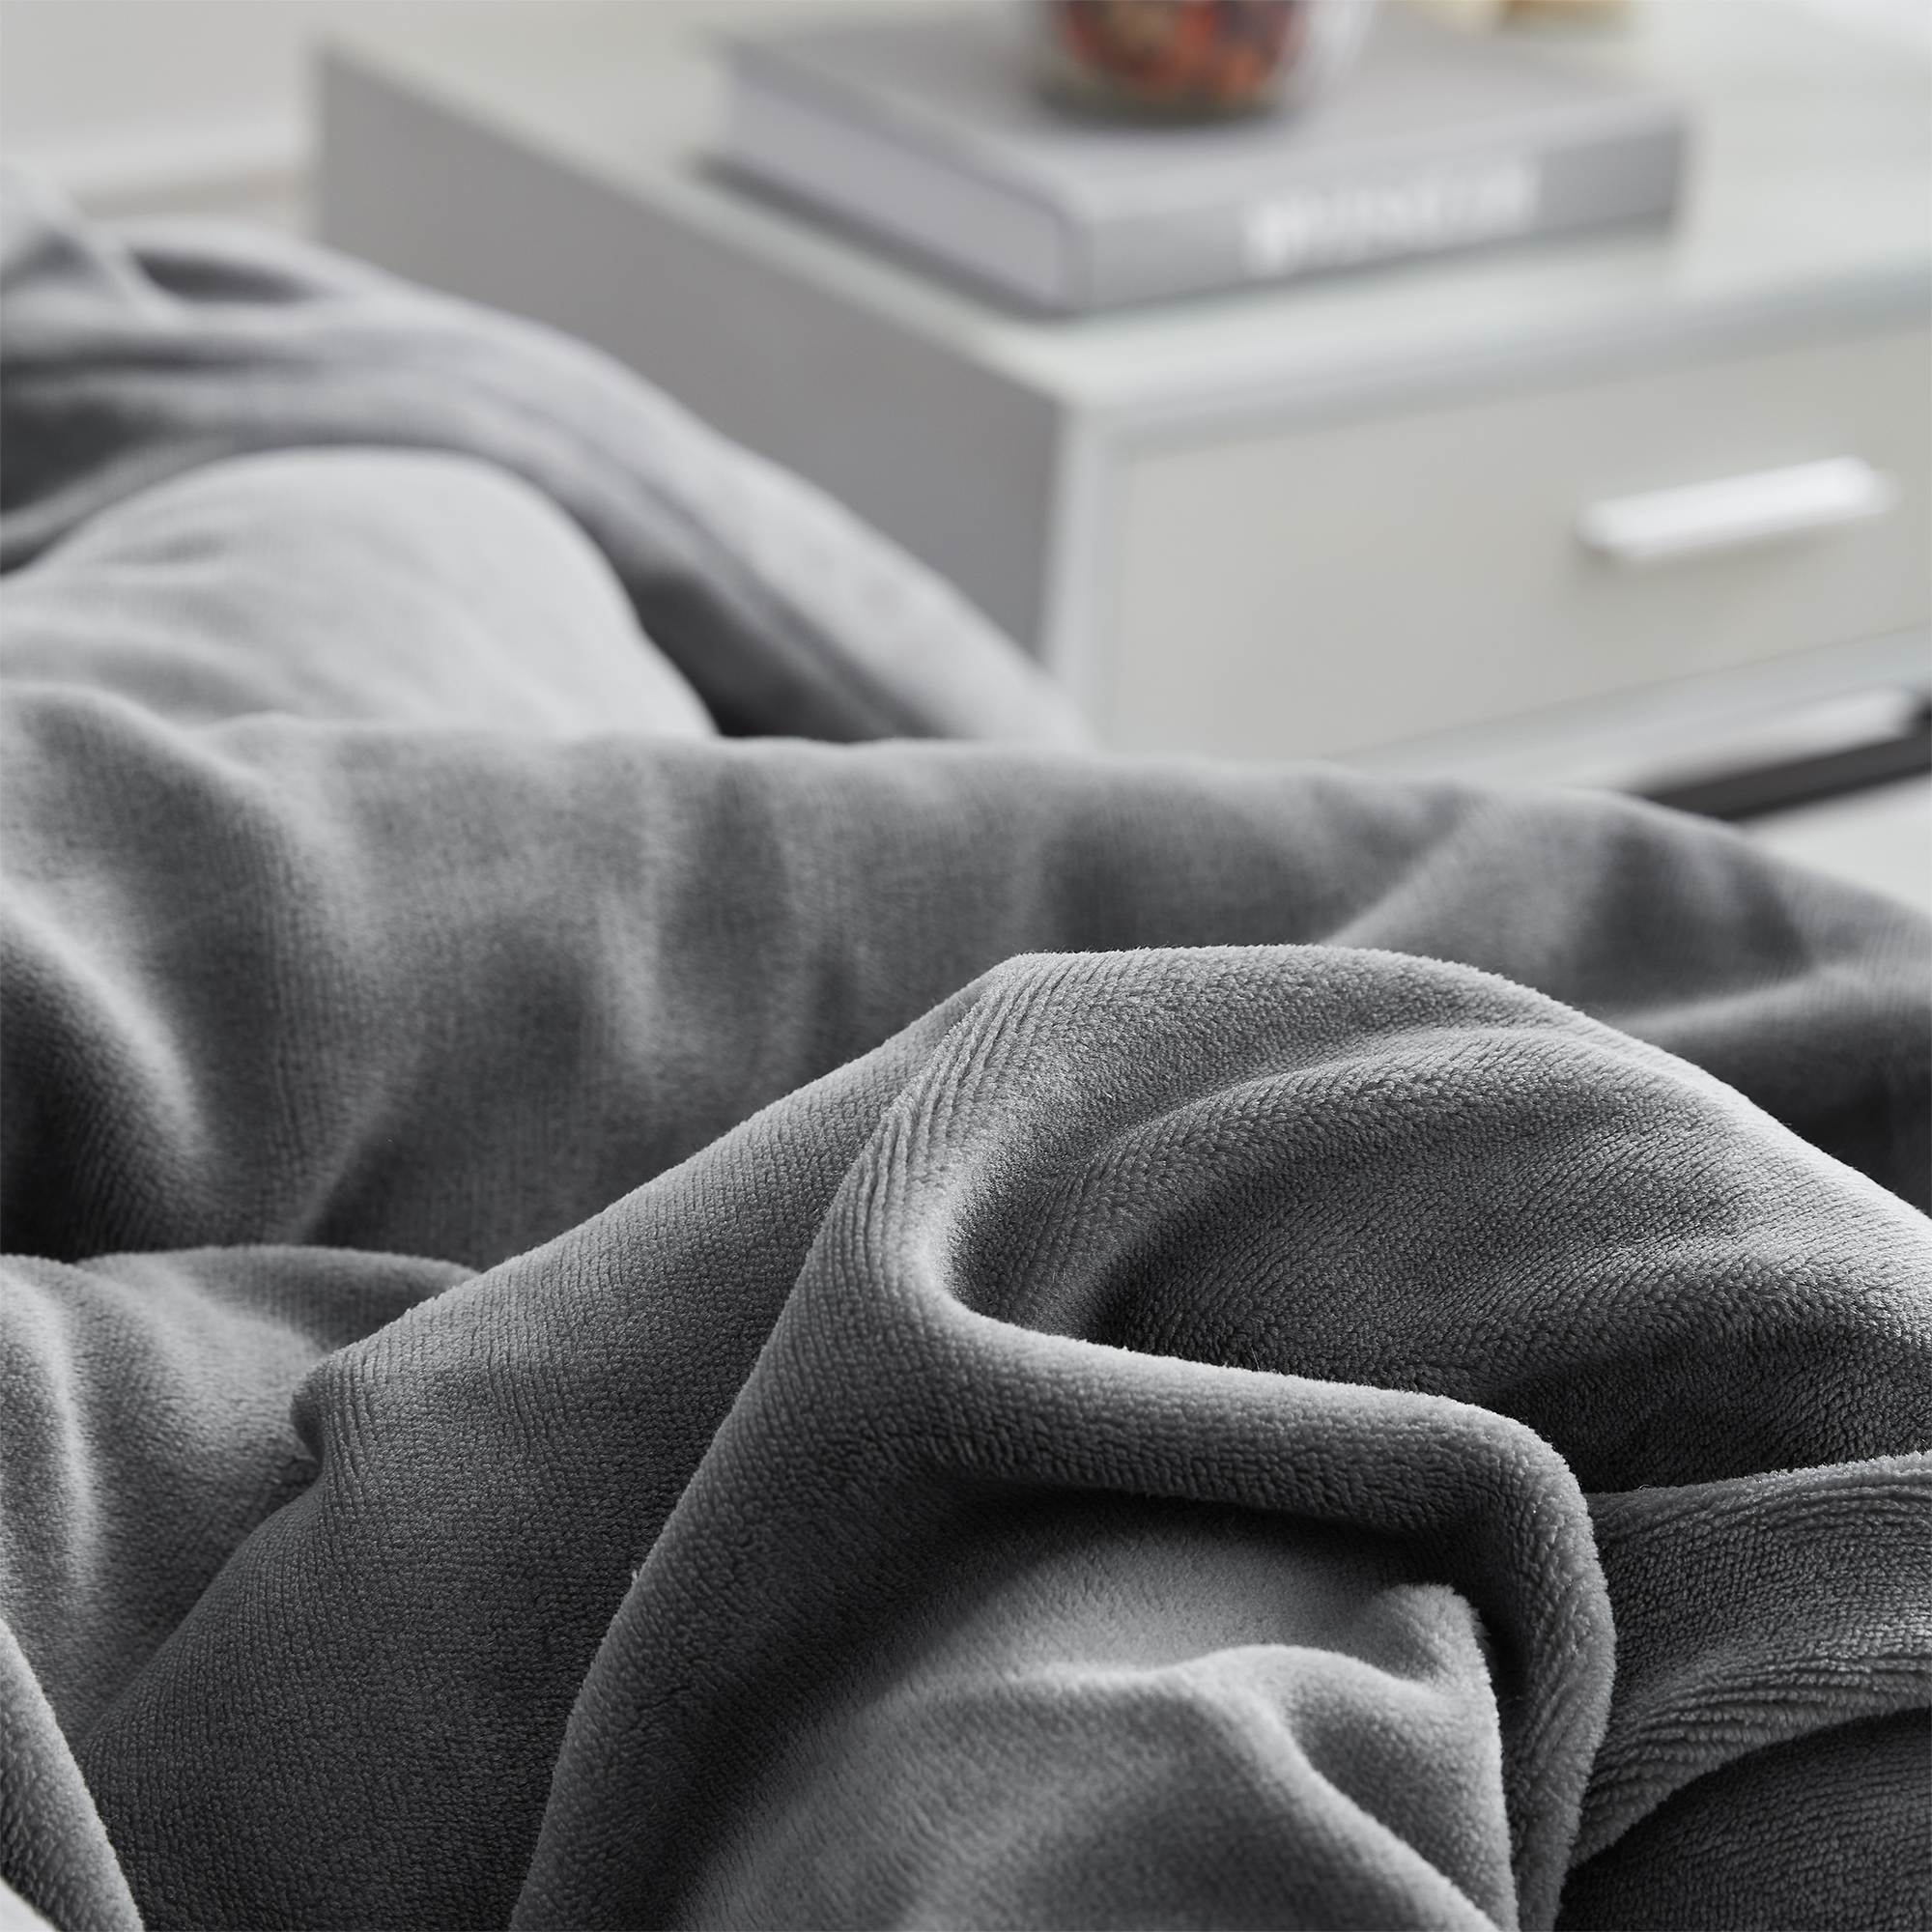 Git Cozy - Coma Inducer® Oversized Comforter - Darkest Gray